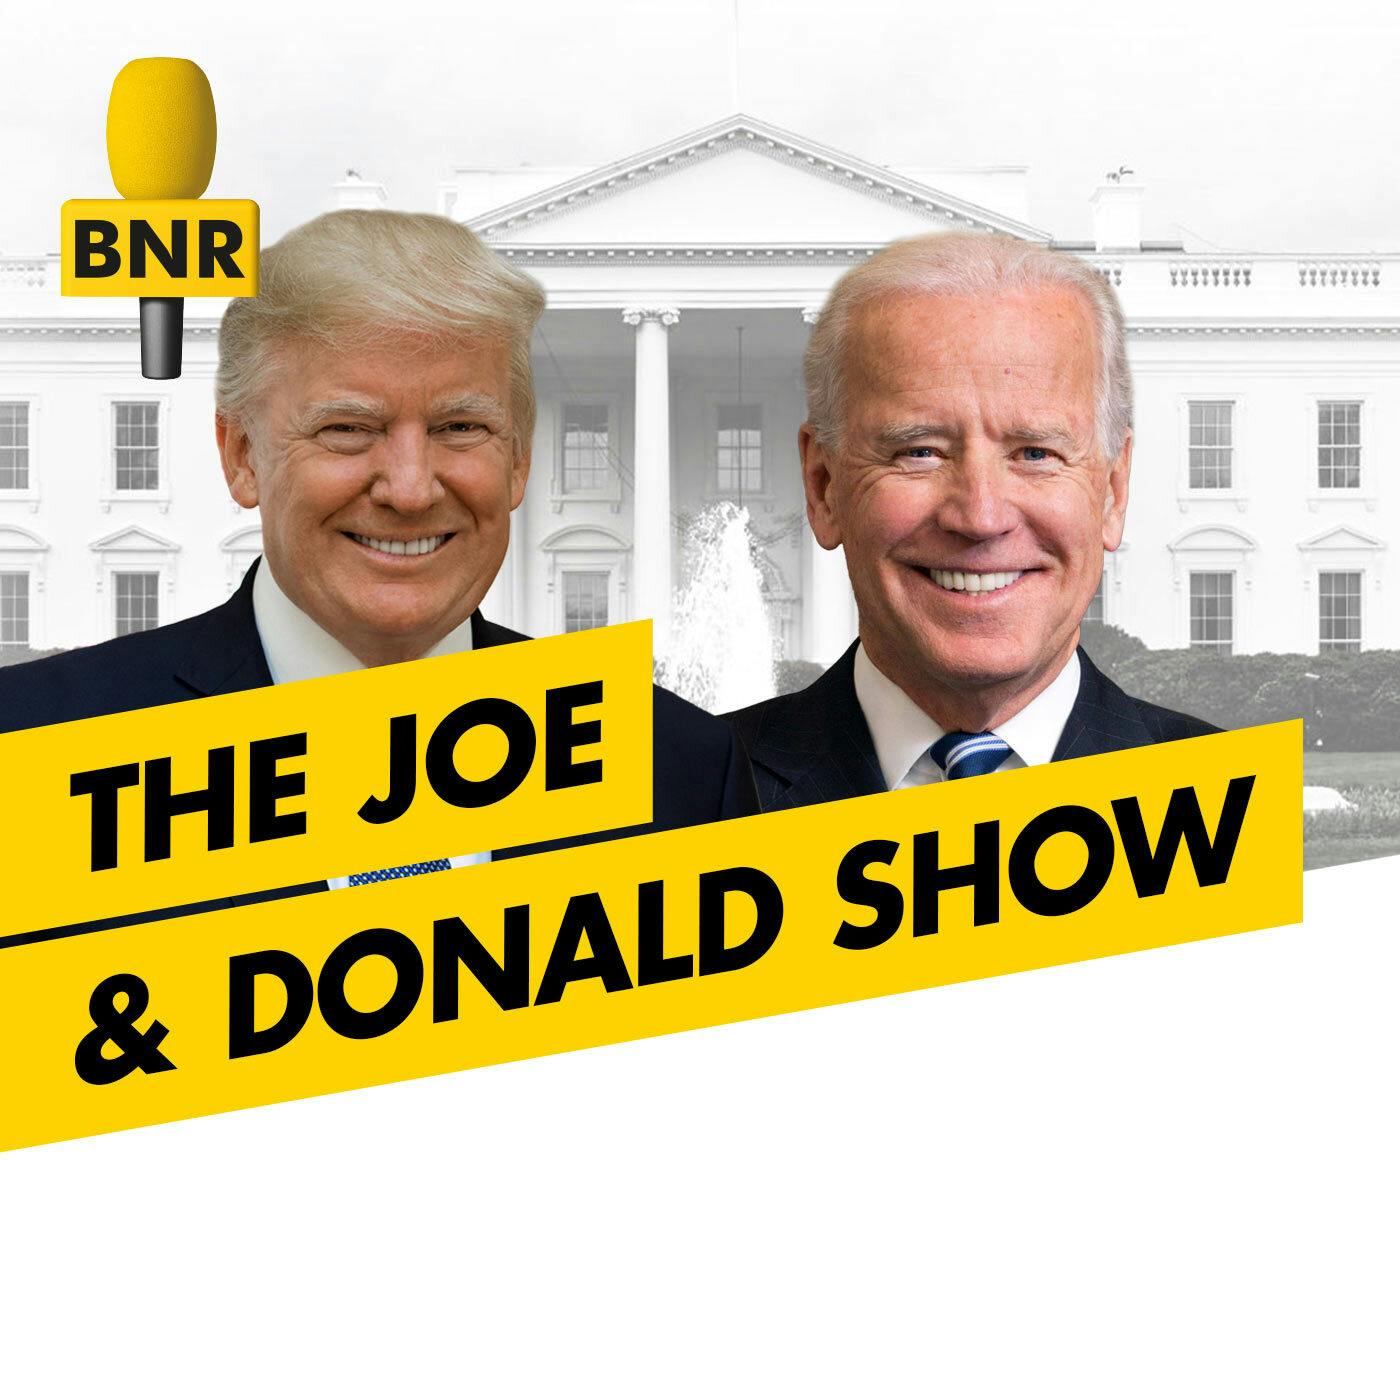 The Joe & Donald Show